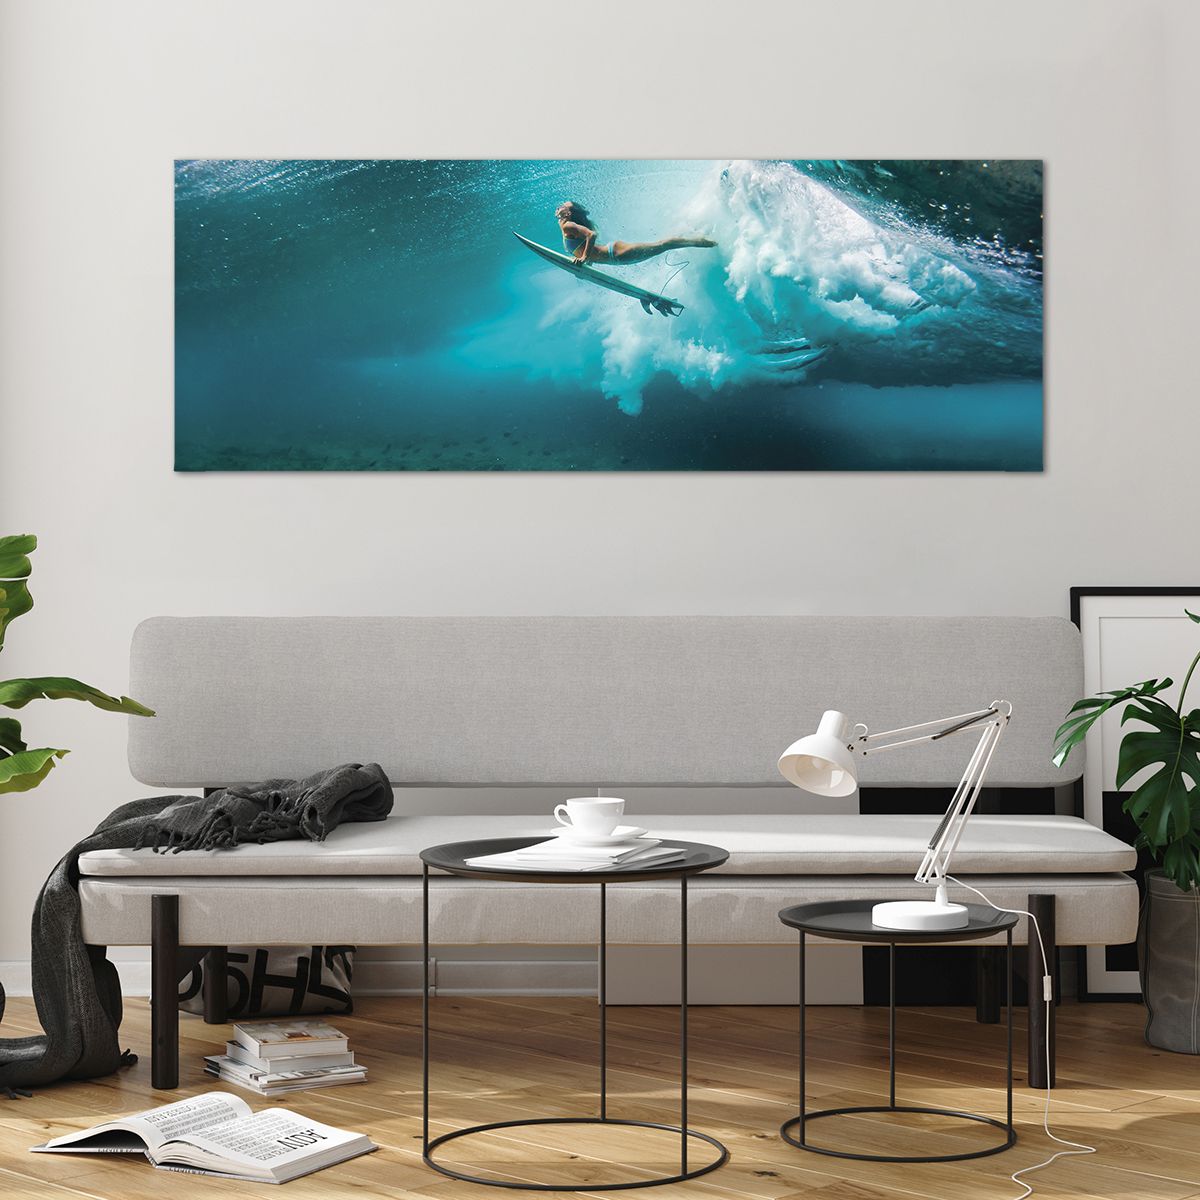 Obrazy na szkle Surfing, Obrazy na szkle Podwodny Świat, Obrazy na szkle Kobieta, Obrazy na szkle Ocean, Obrazy na szkle Sport